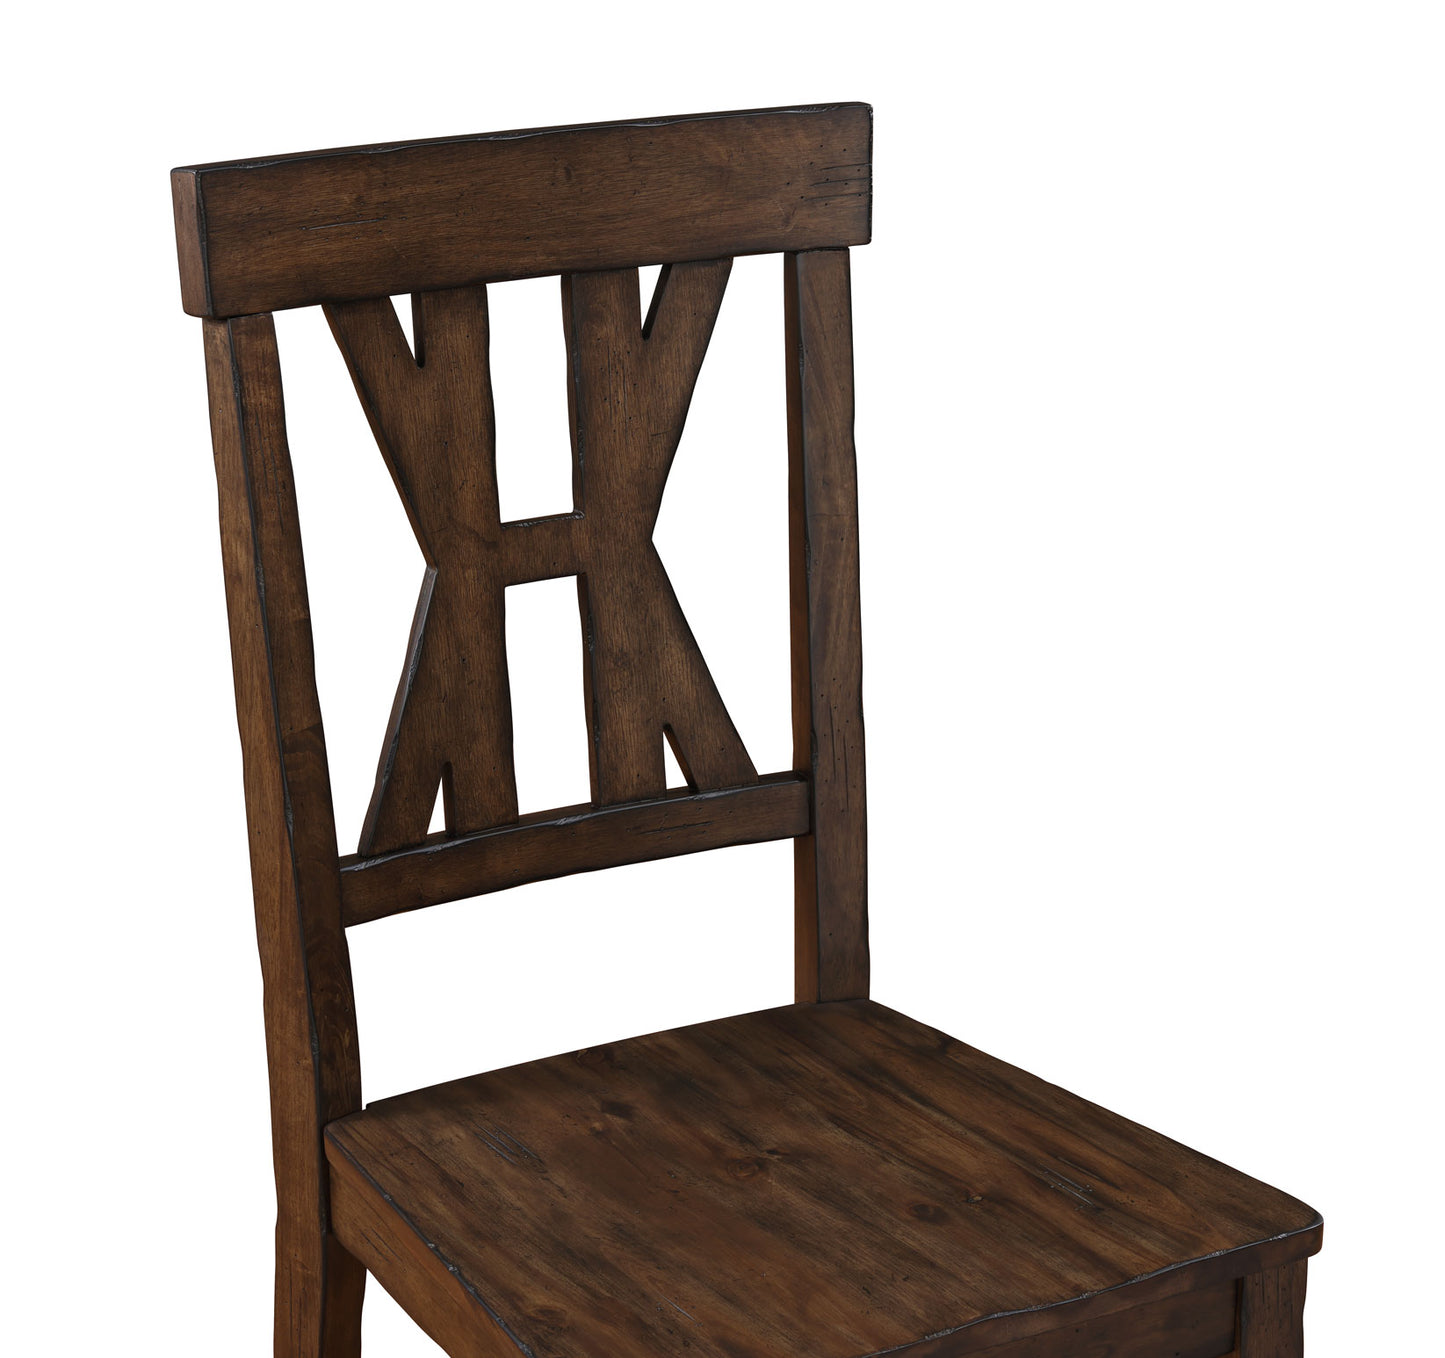 Auburn Side Chair